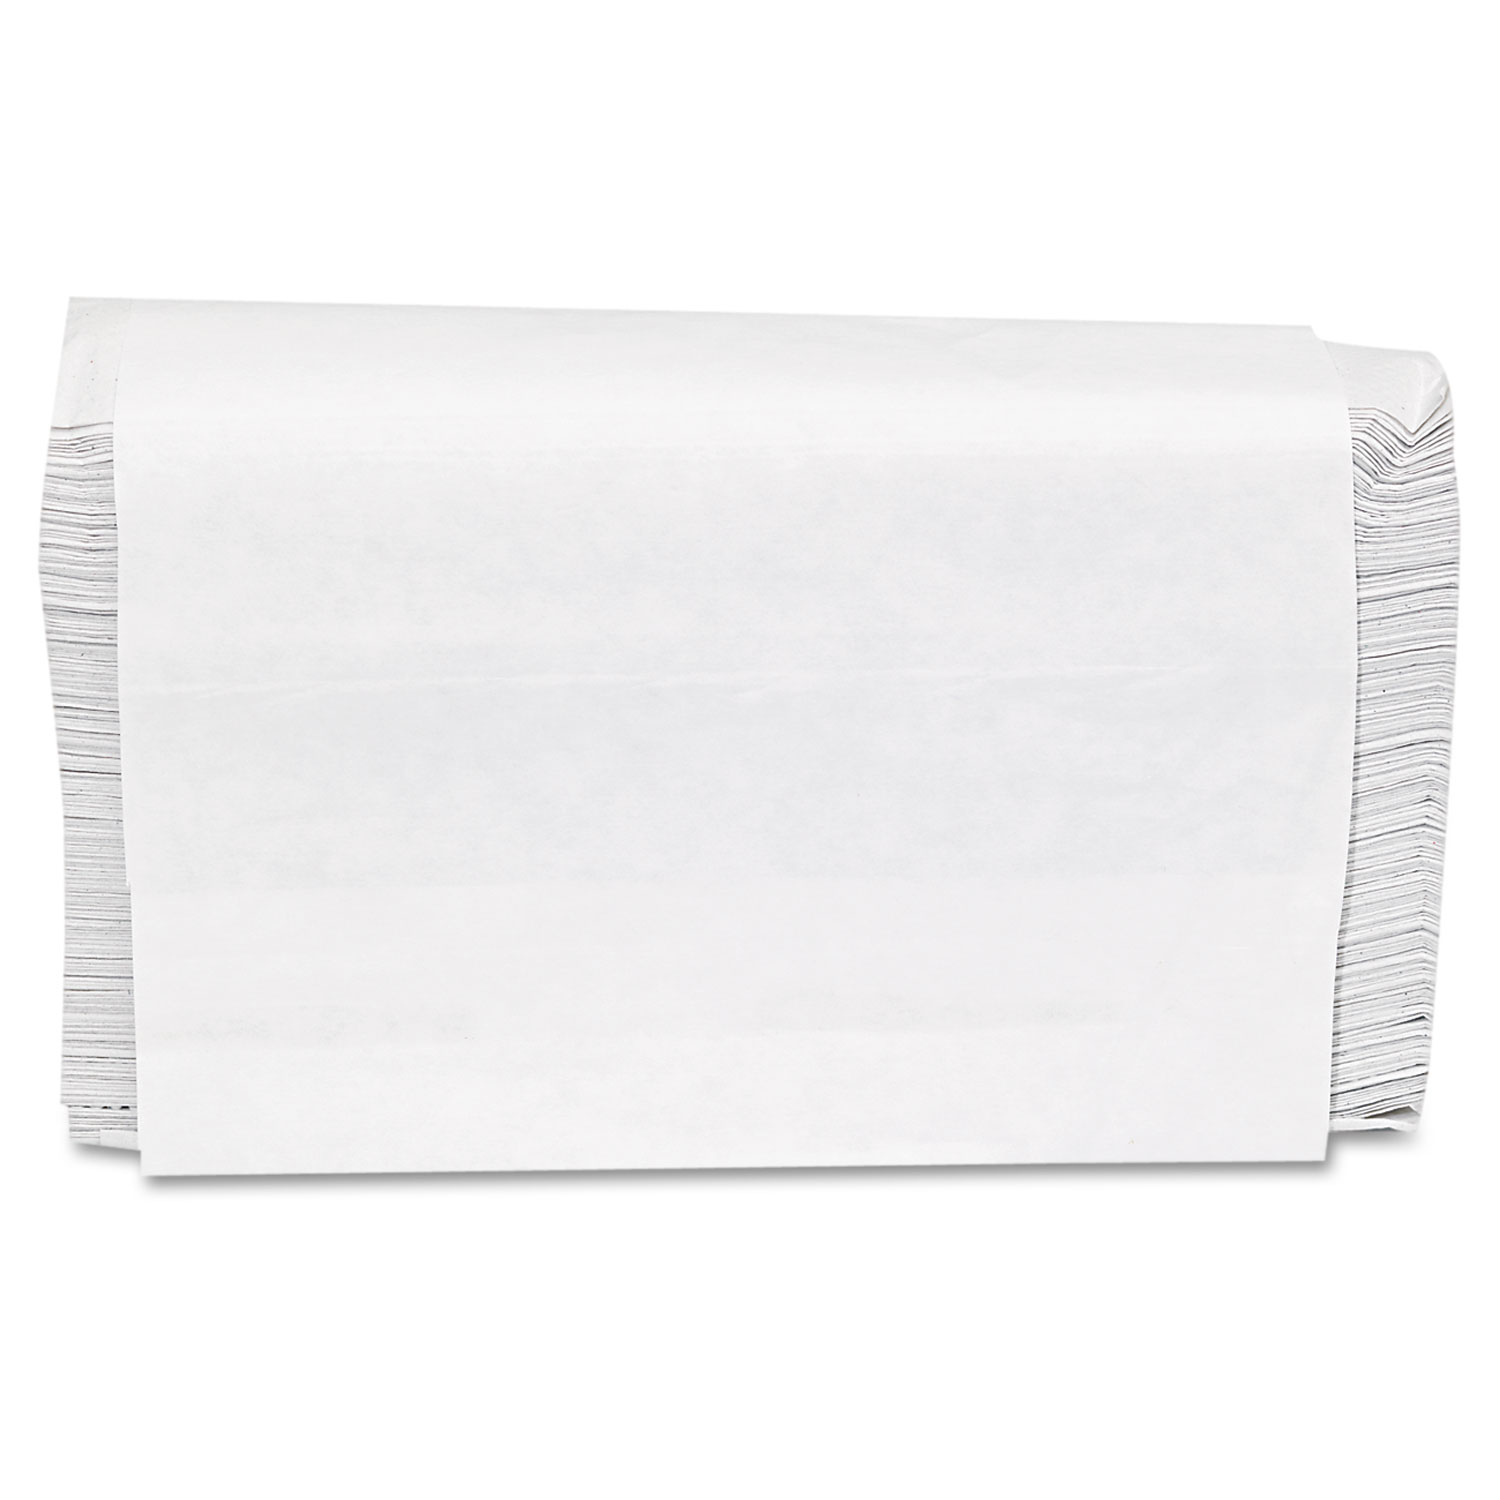  GEN G1509 Folded Paper Towels, Multifold, 9 x 9 9/20, White, 250 Towels/Pack, 16 Packs/CT (GEN1509) 